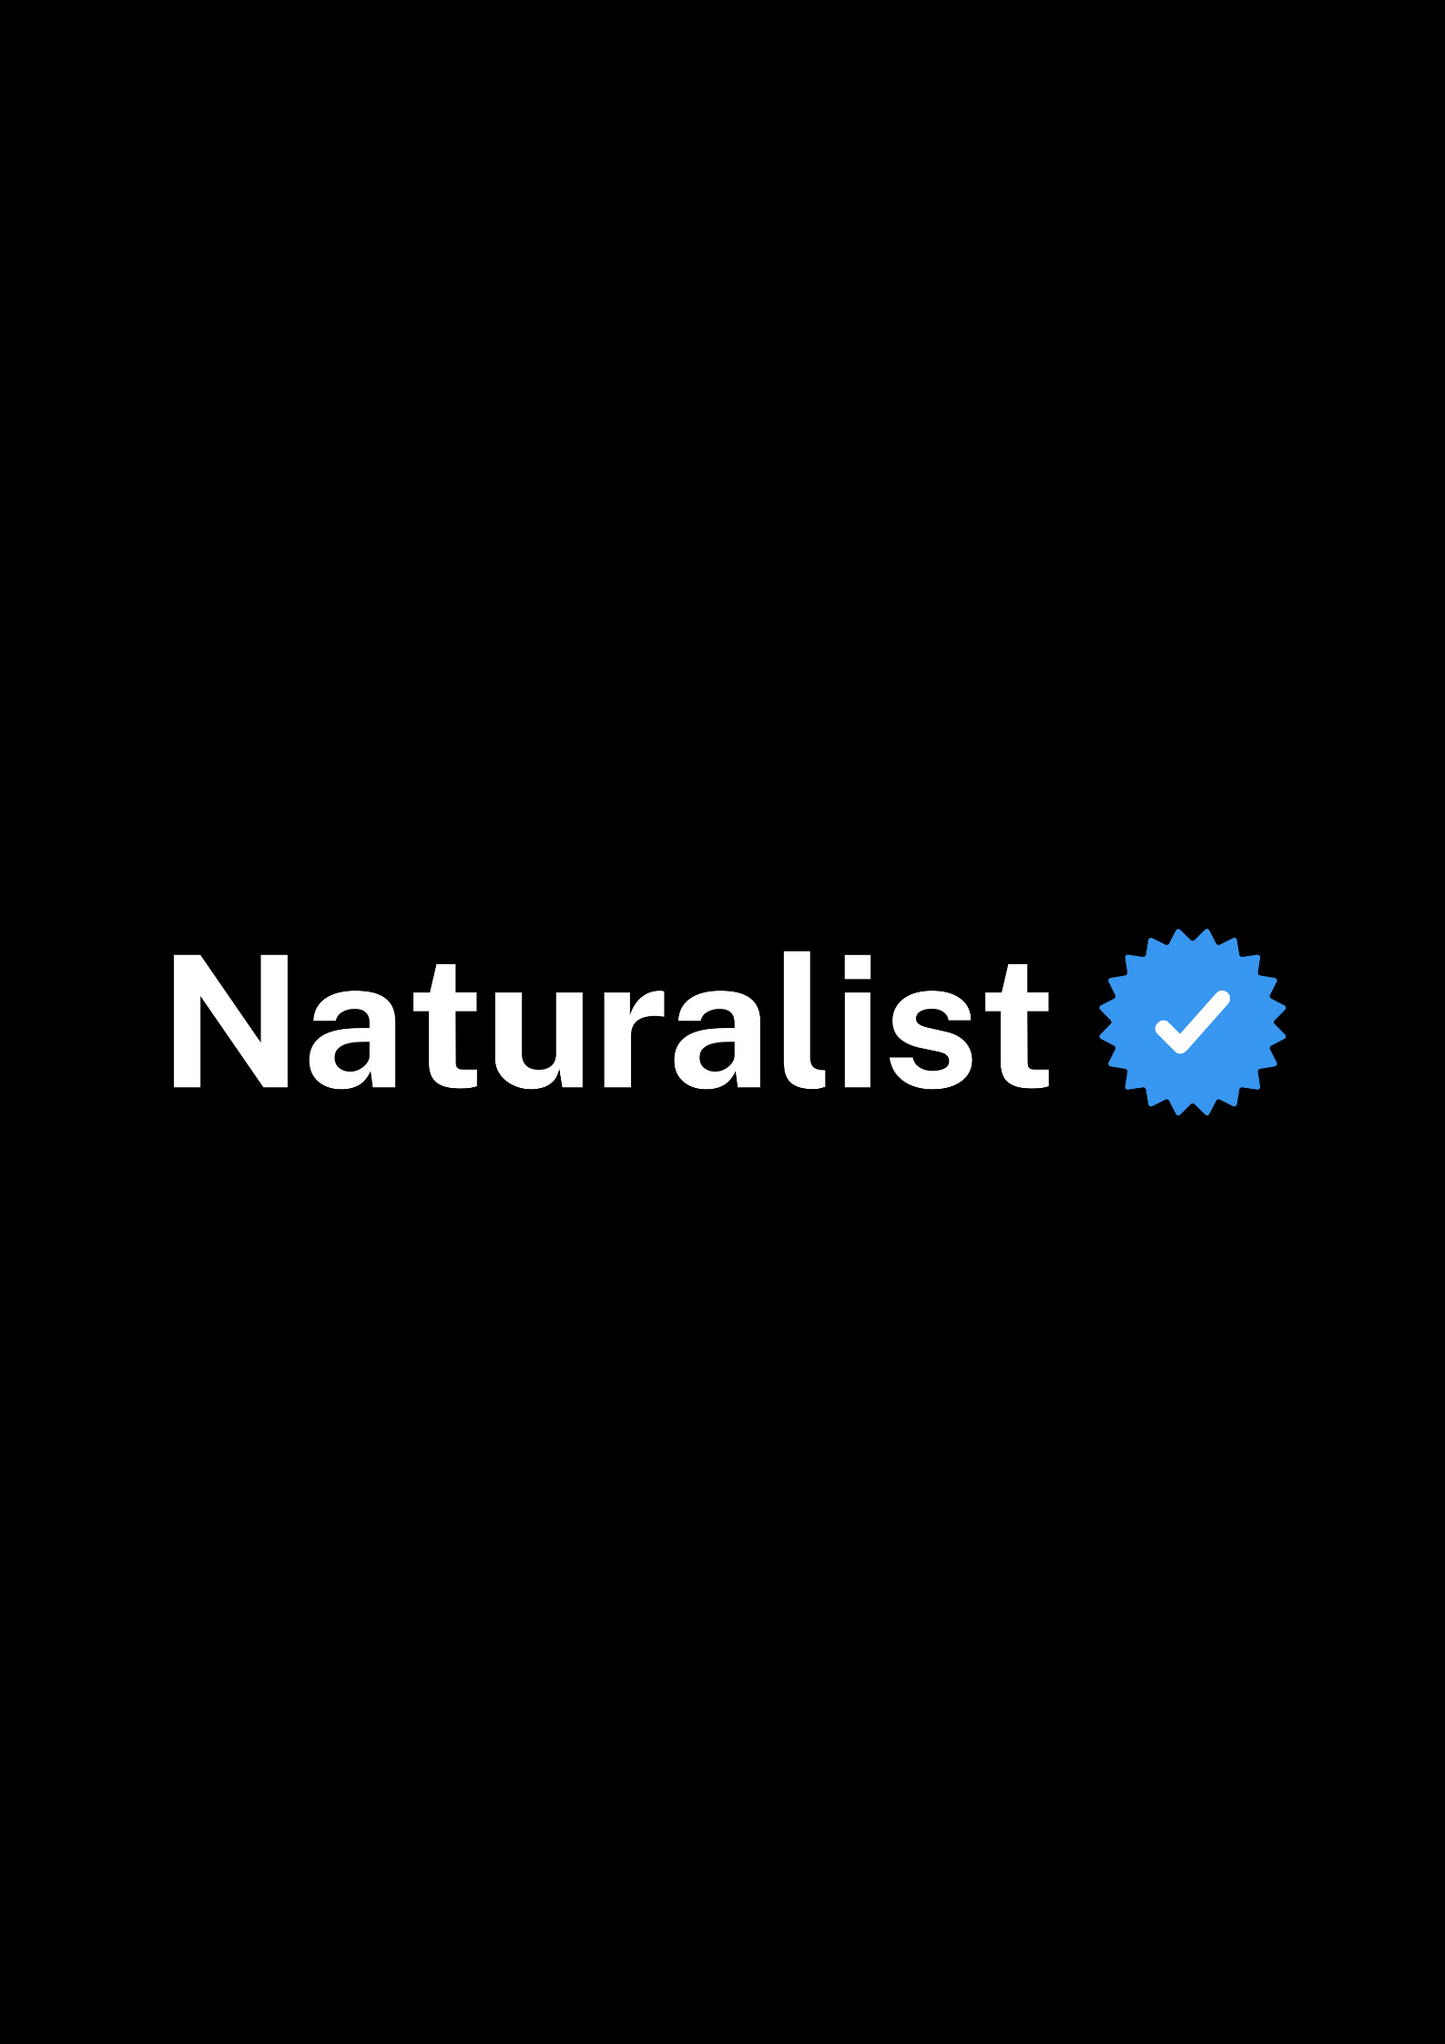 Verified Naturalist